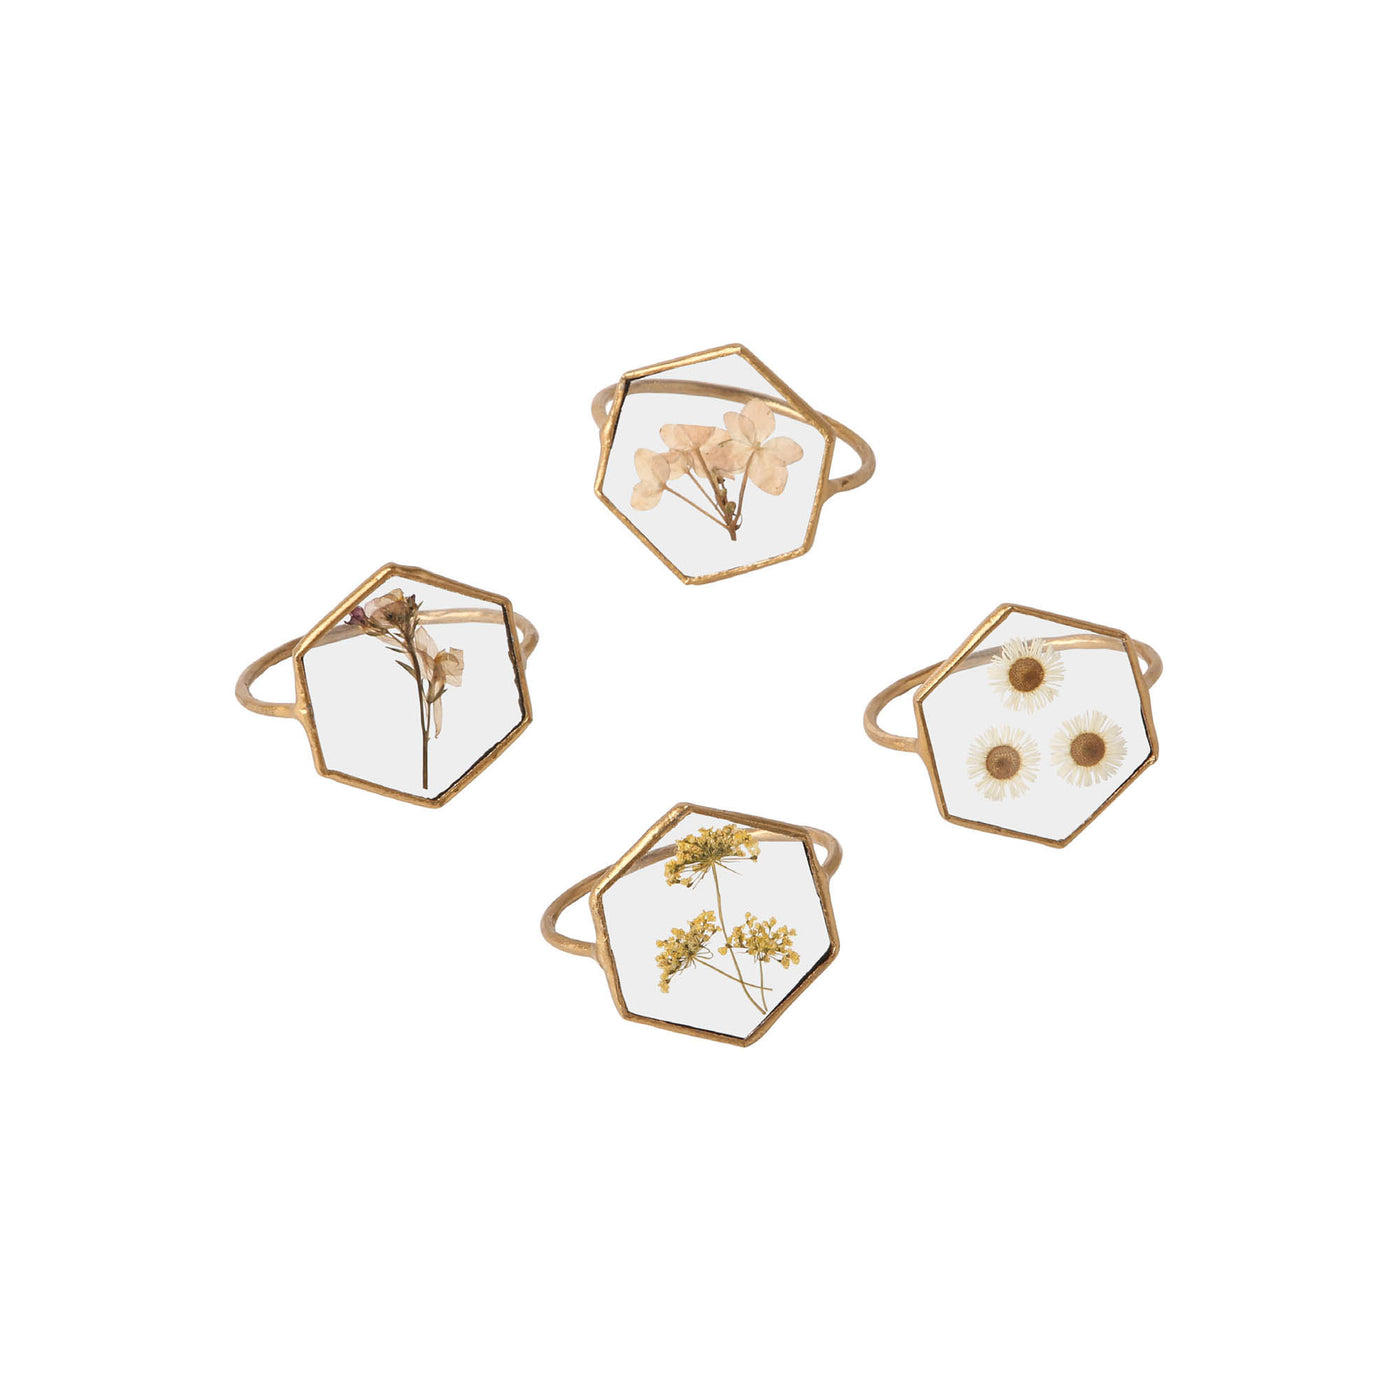 Earth Tones Hexagon Pressed Floral Napkin Ring Set